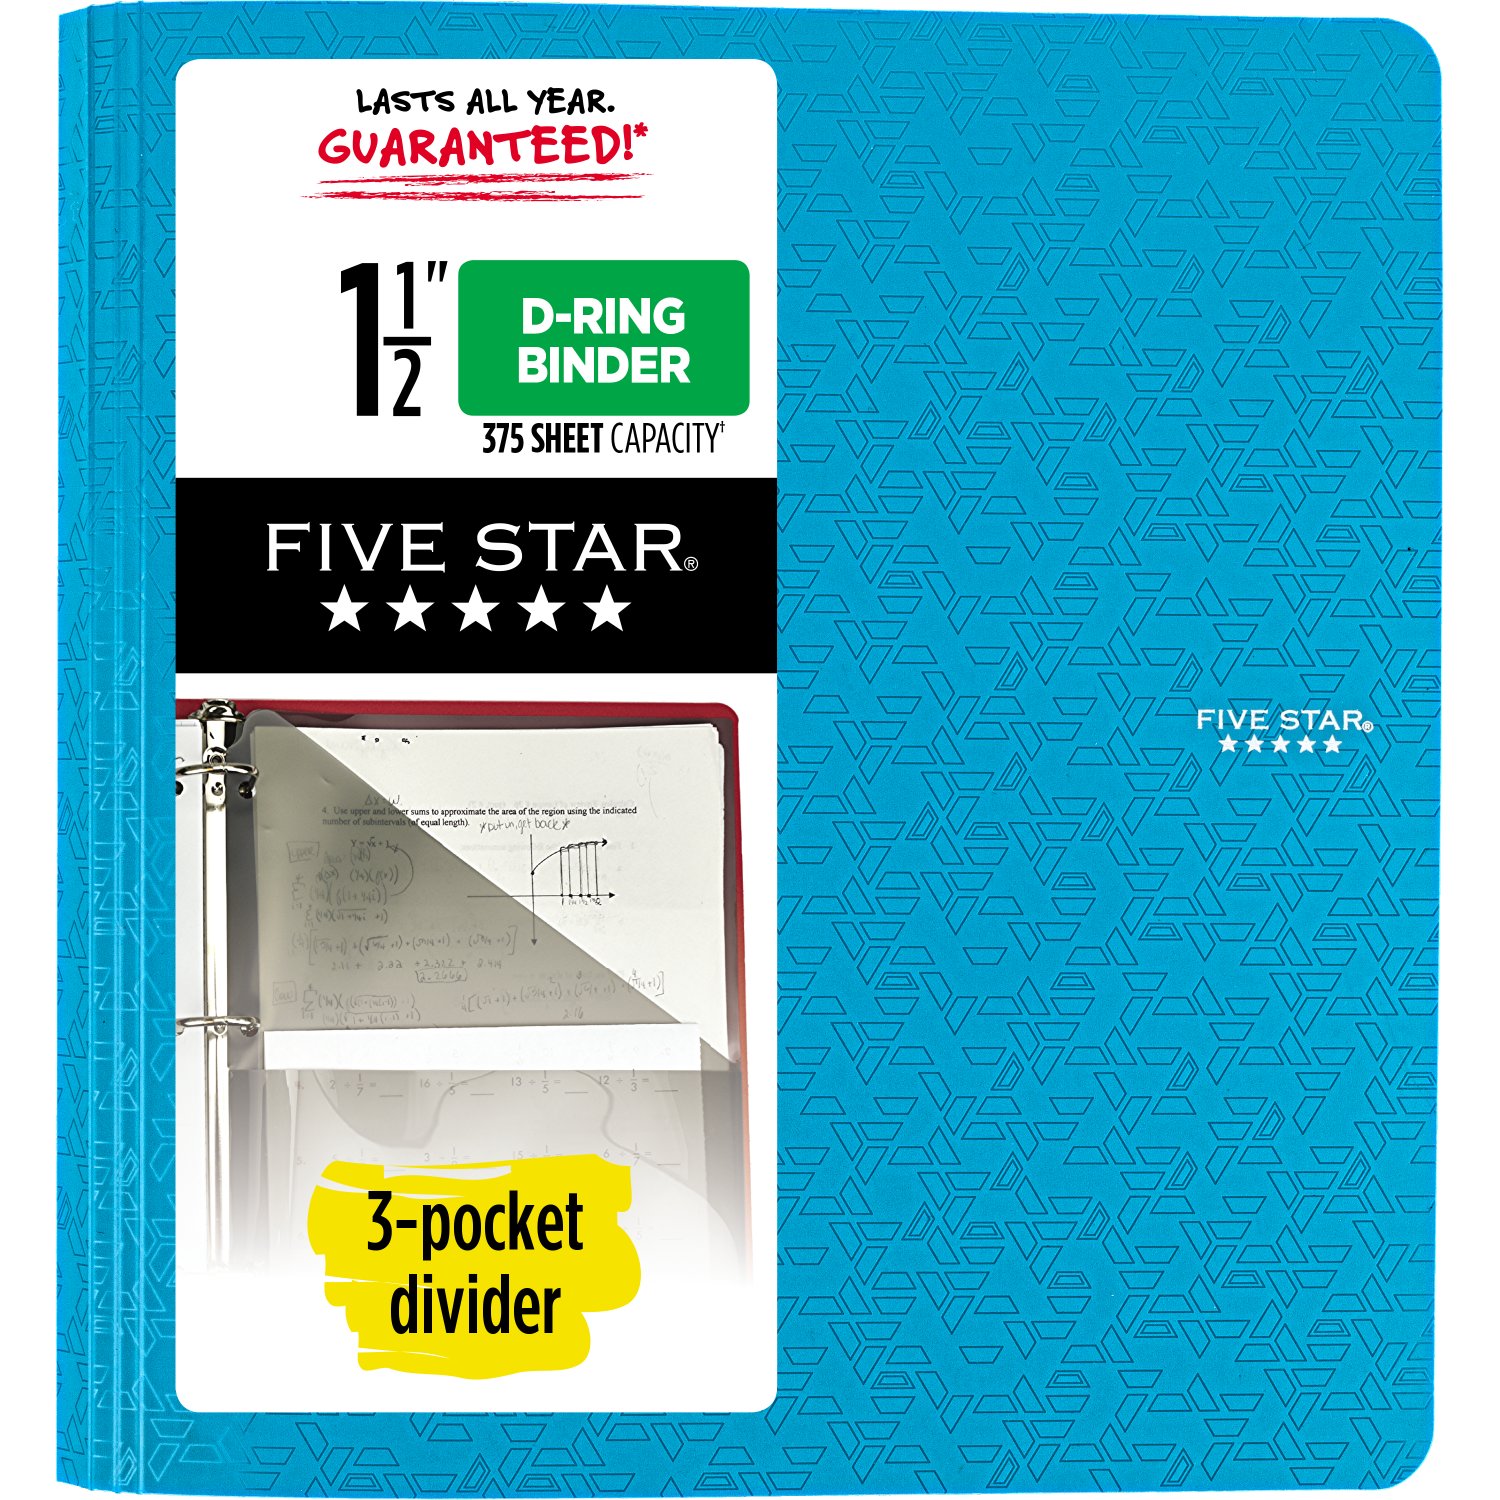 Five Star 1 1/2 Plastic Binder  University of California Riverside  Bookstore